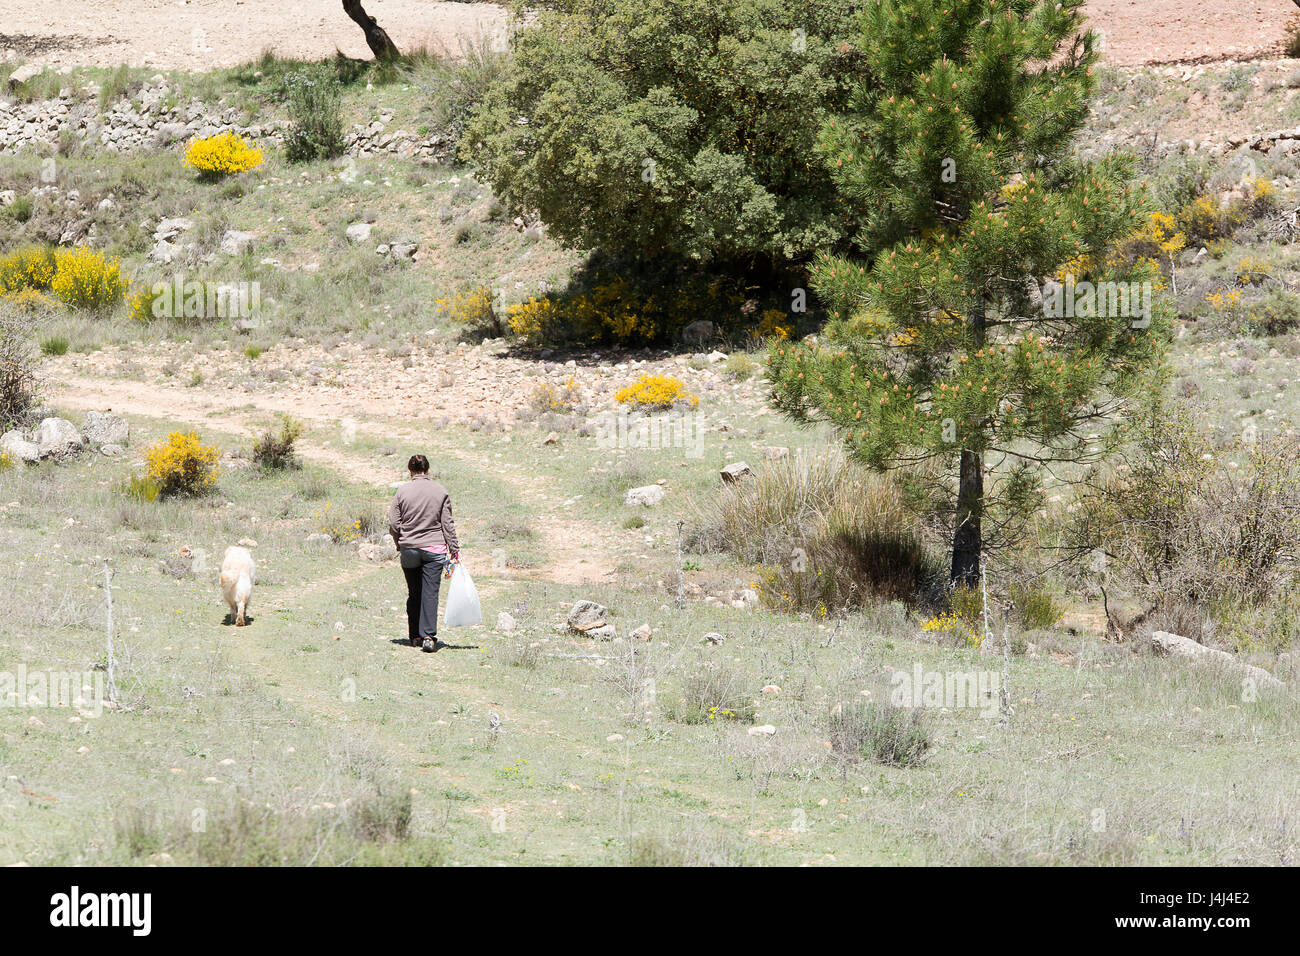 Woman hiking with her dog in Cañadas de Haches de Arriba, Bogarra province of Albacete in Spain. Stock Photo